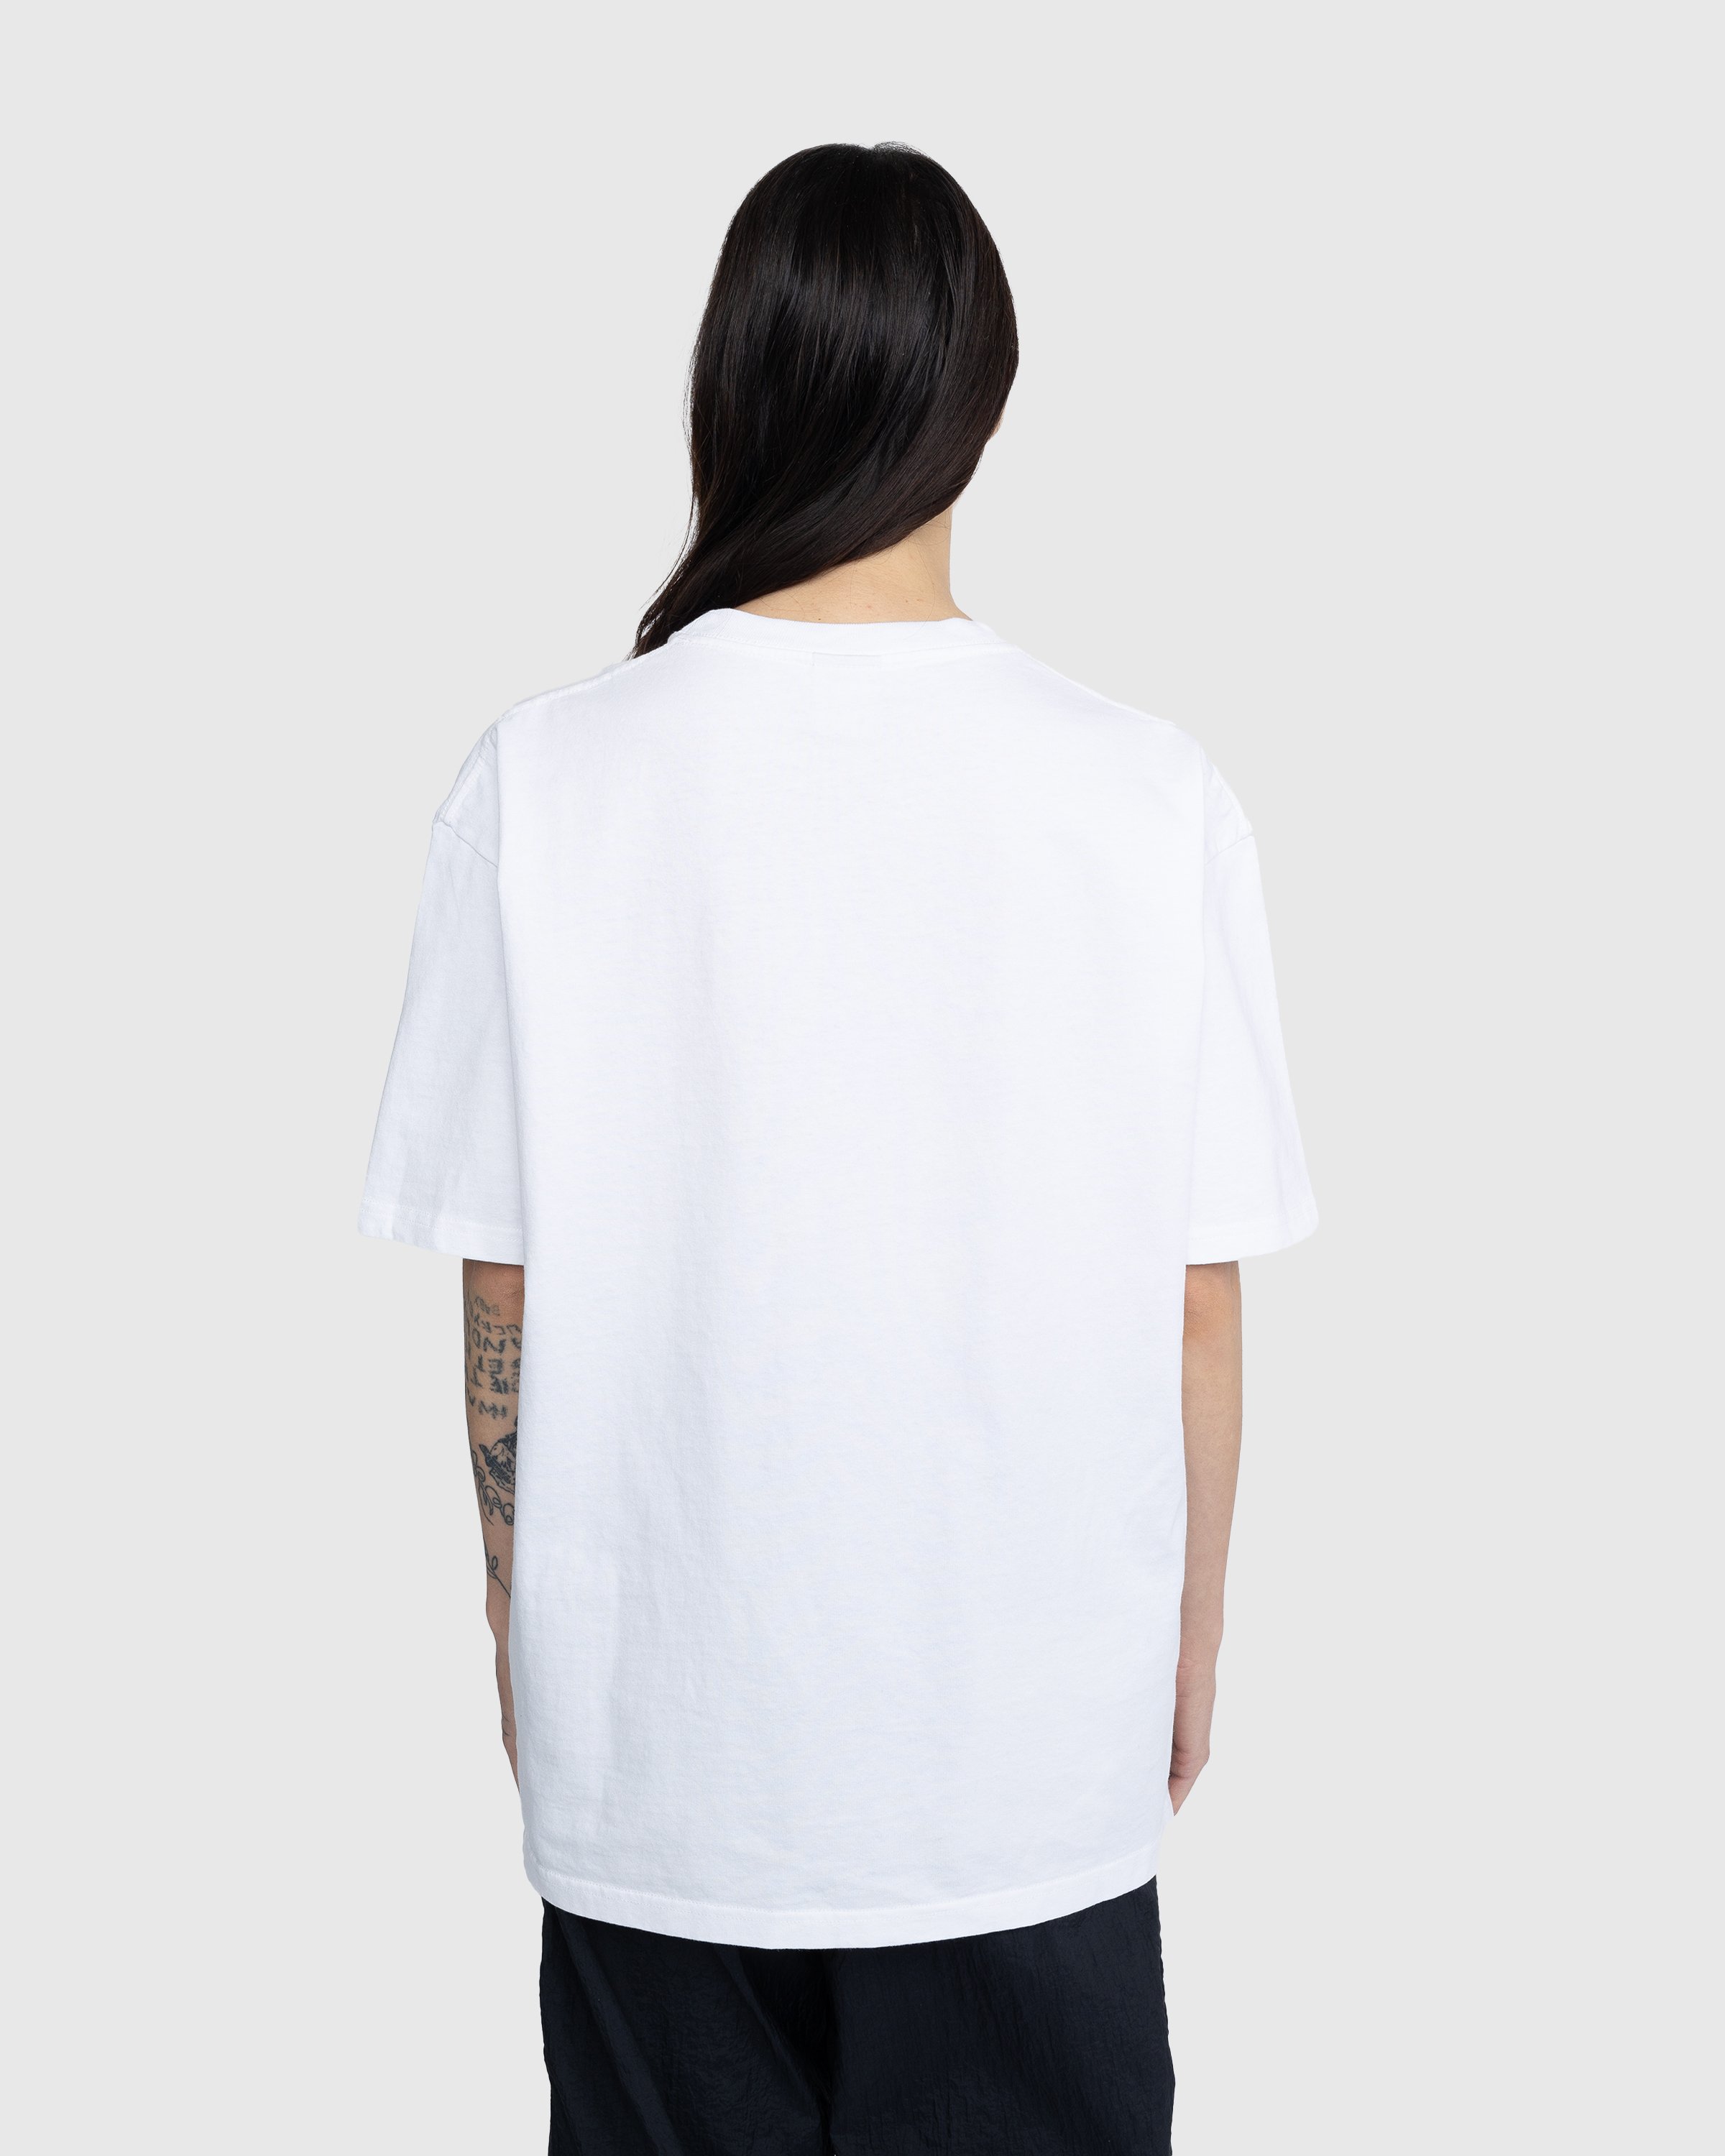 Bar Basso x Highsnobiety - Sbagliato T-Shirt White - Clothing - White - Image 6